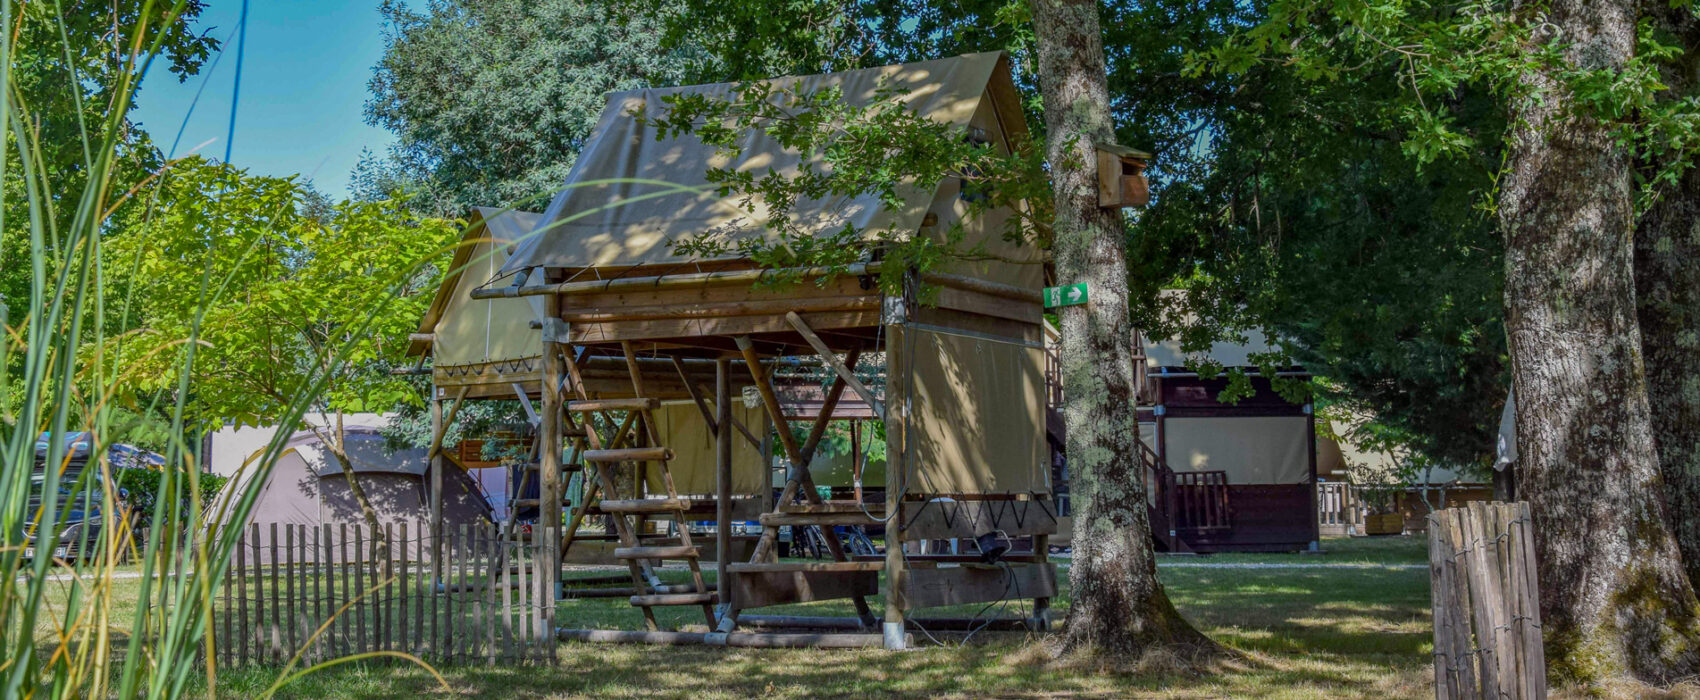 Camping-leboncoin-banner